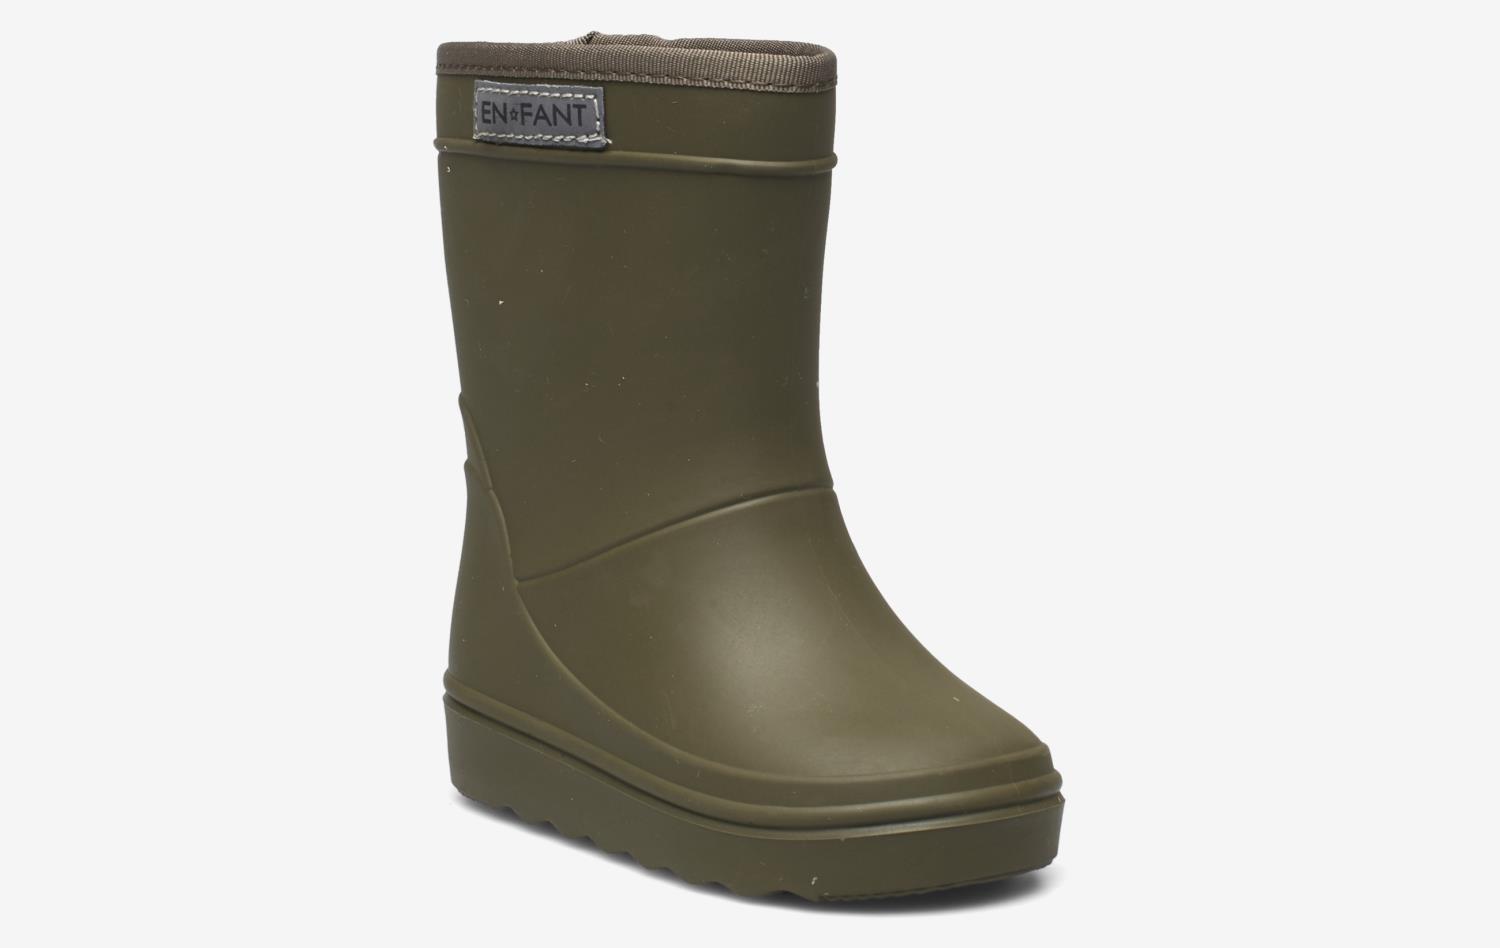 Rain Boots Solid